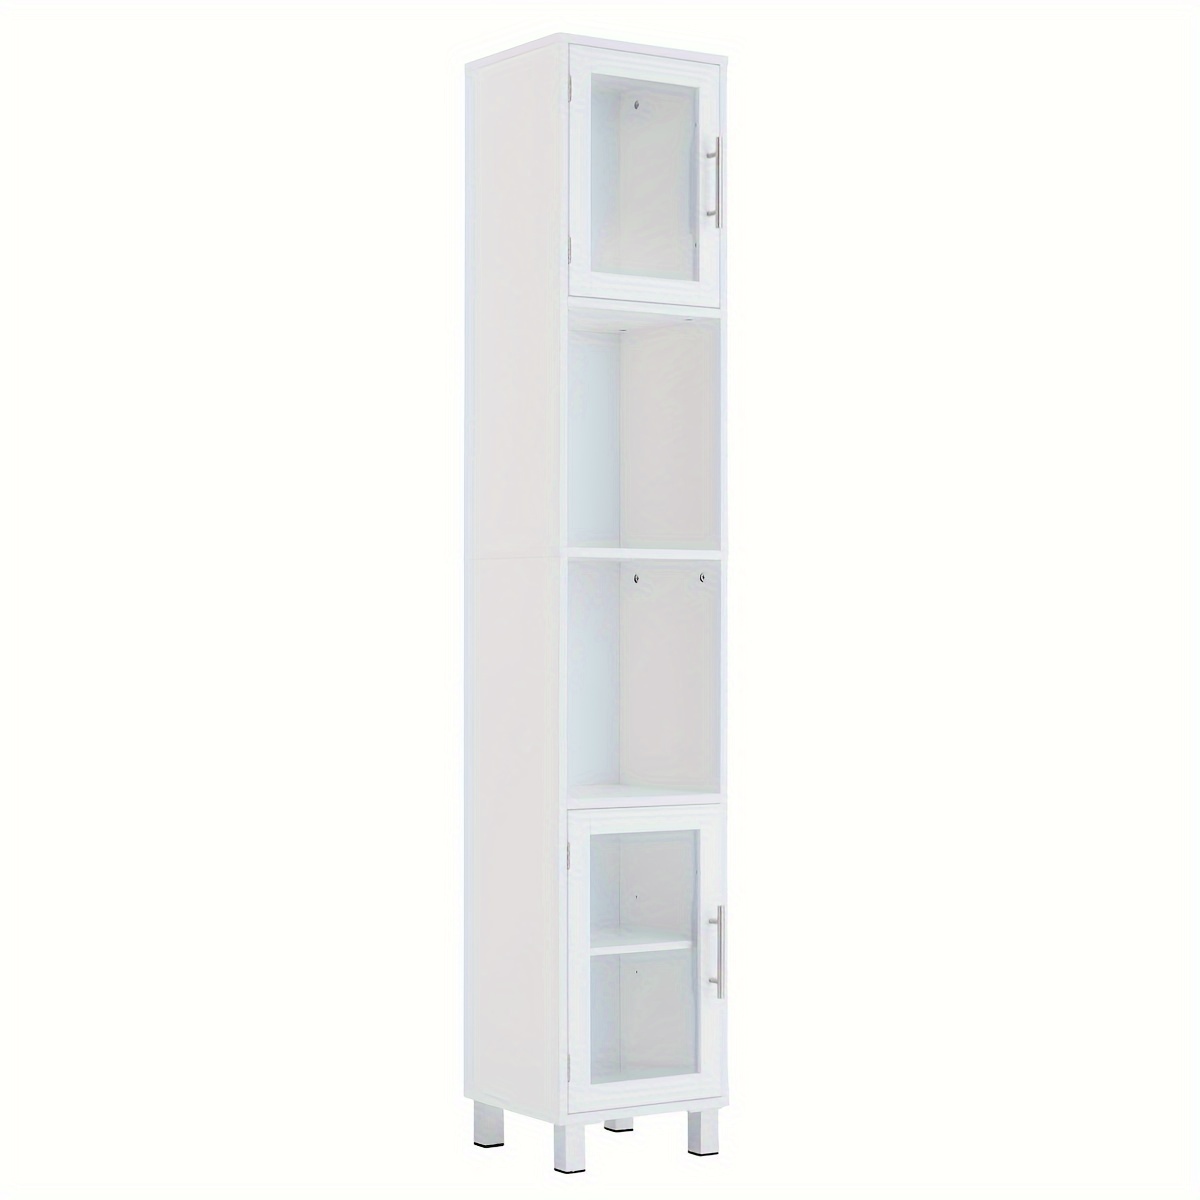 

1pc Tall Tower Storage Cabinet, White Display Shelves, Multi-layer Storage Rack, Bedroom Living Room Bathroom Accessories, Storage & Organization, Home Decor, Room Decor